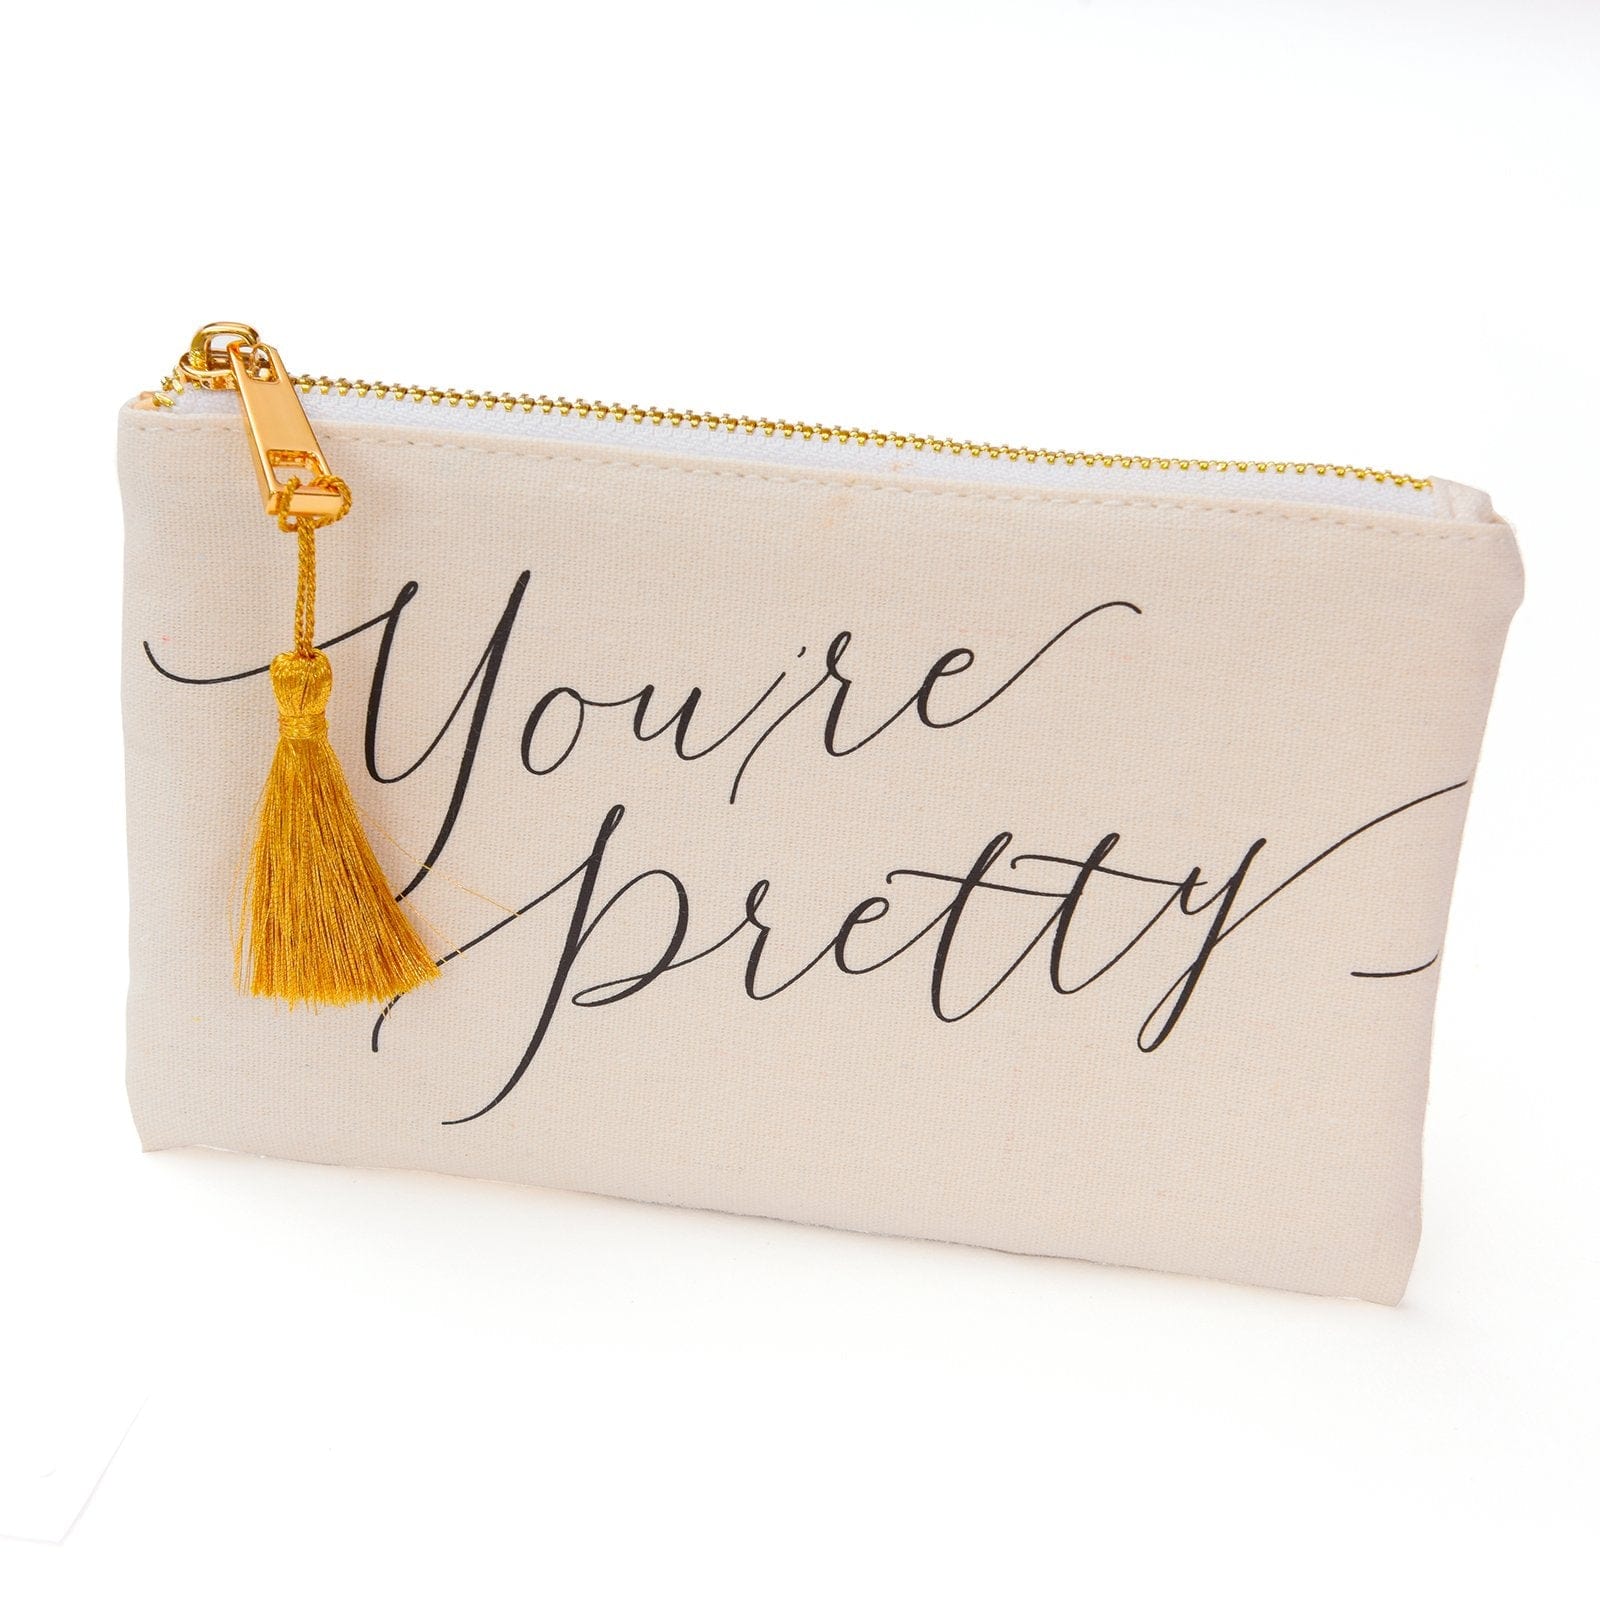 You're Pretty' Makeup Bag  Style Me Pretty - Gartner Studios